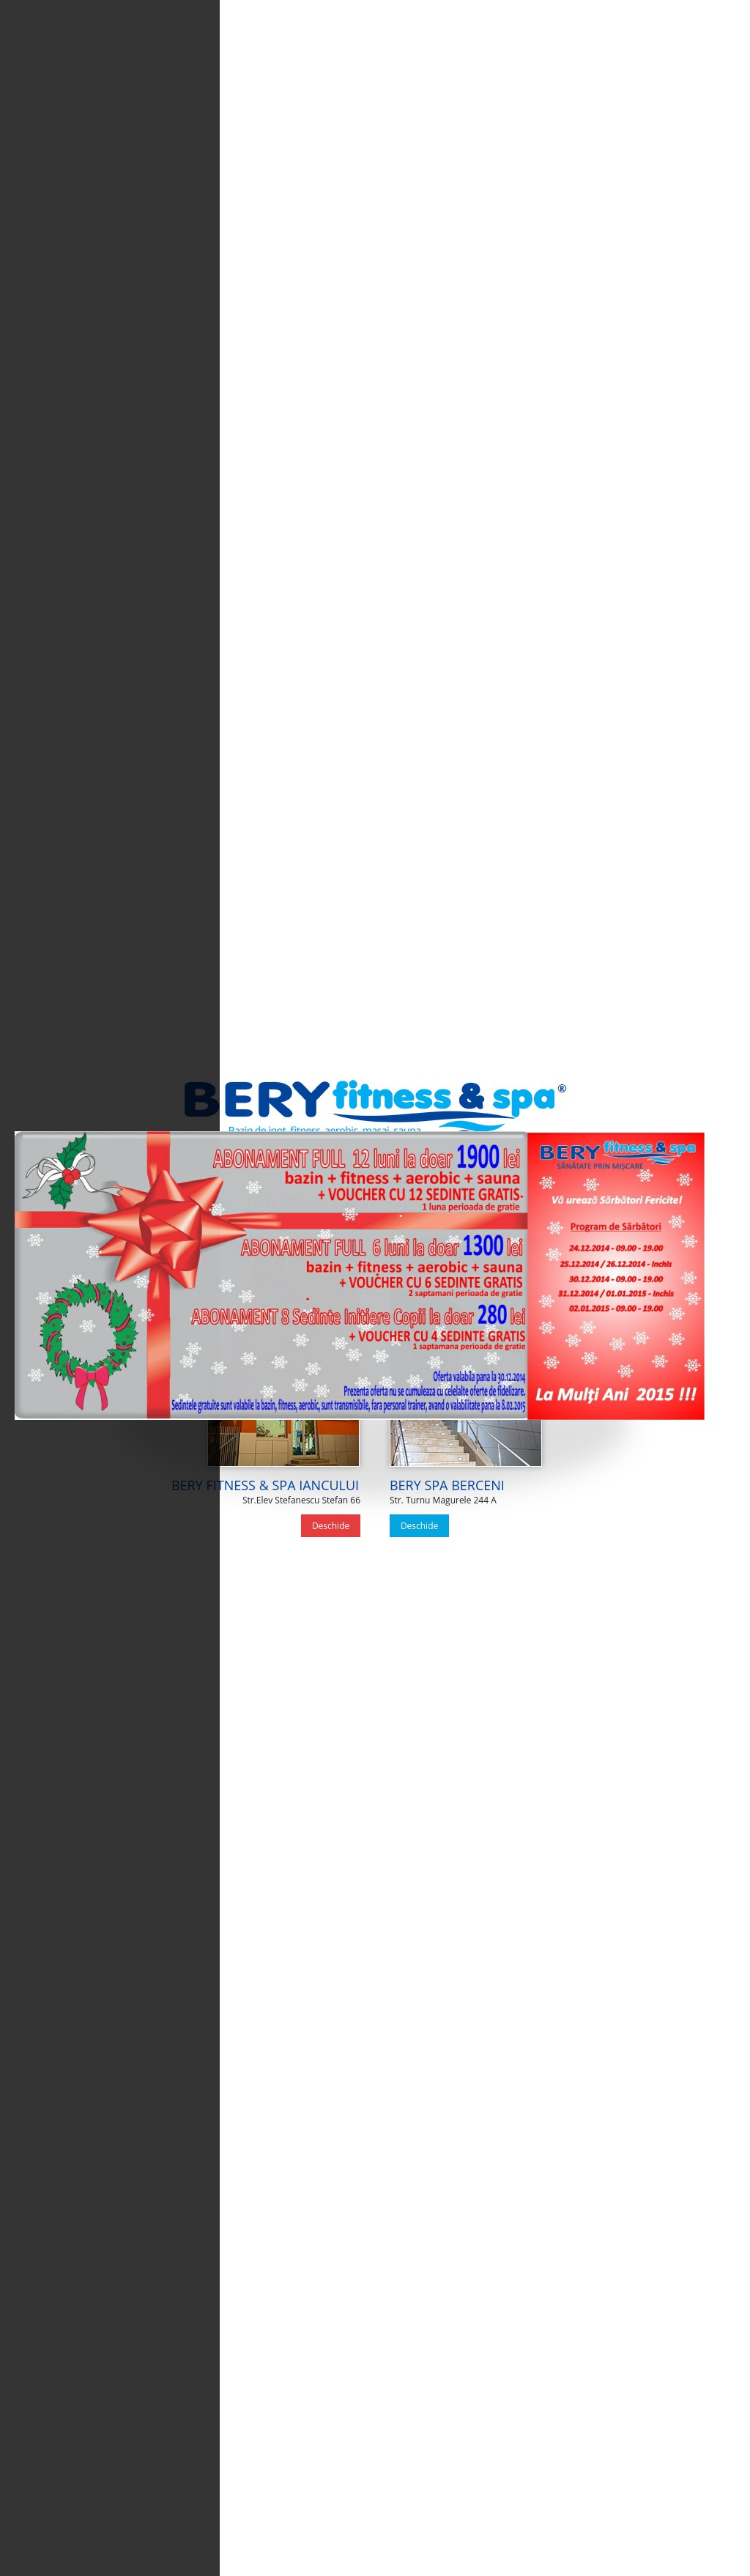 Bery Fitness & Spa